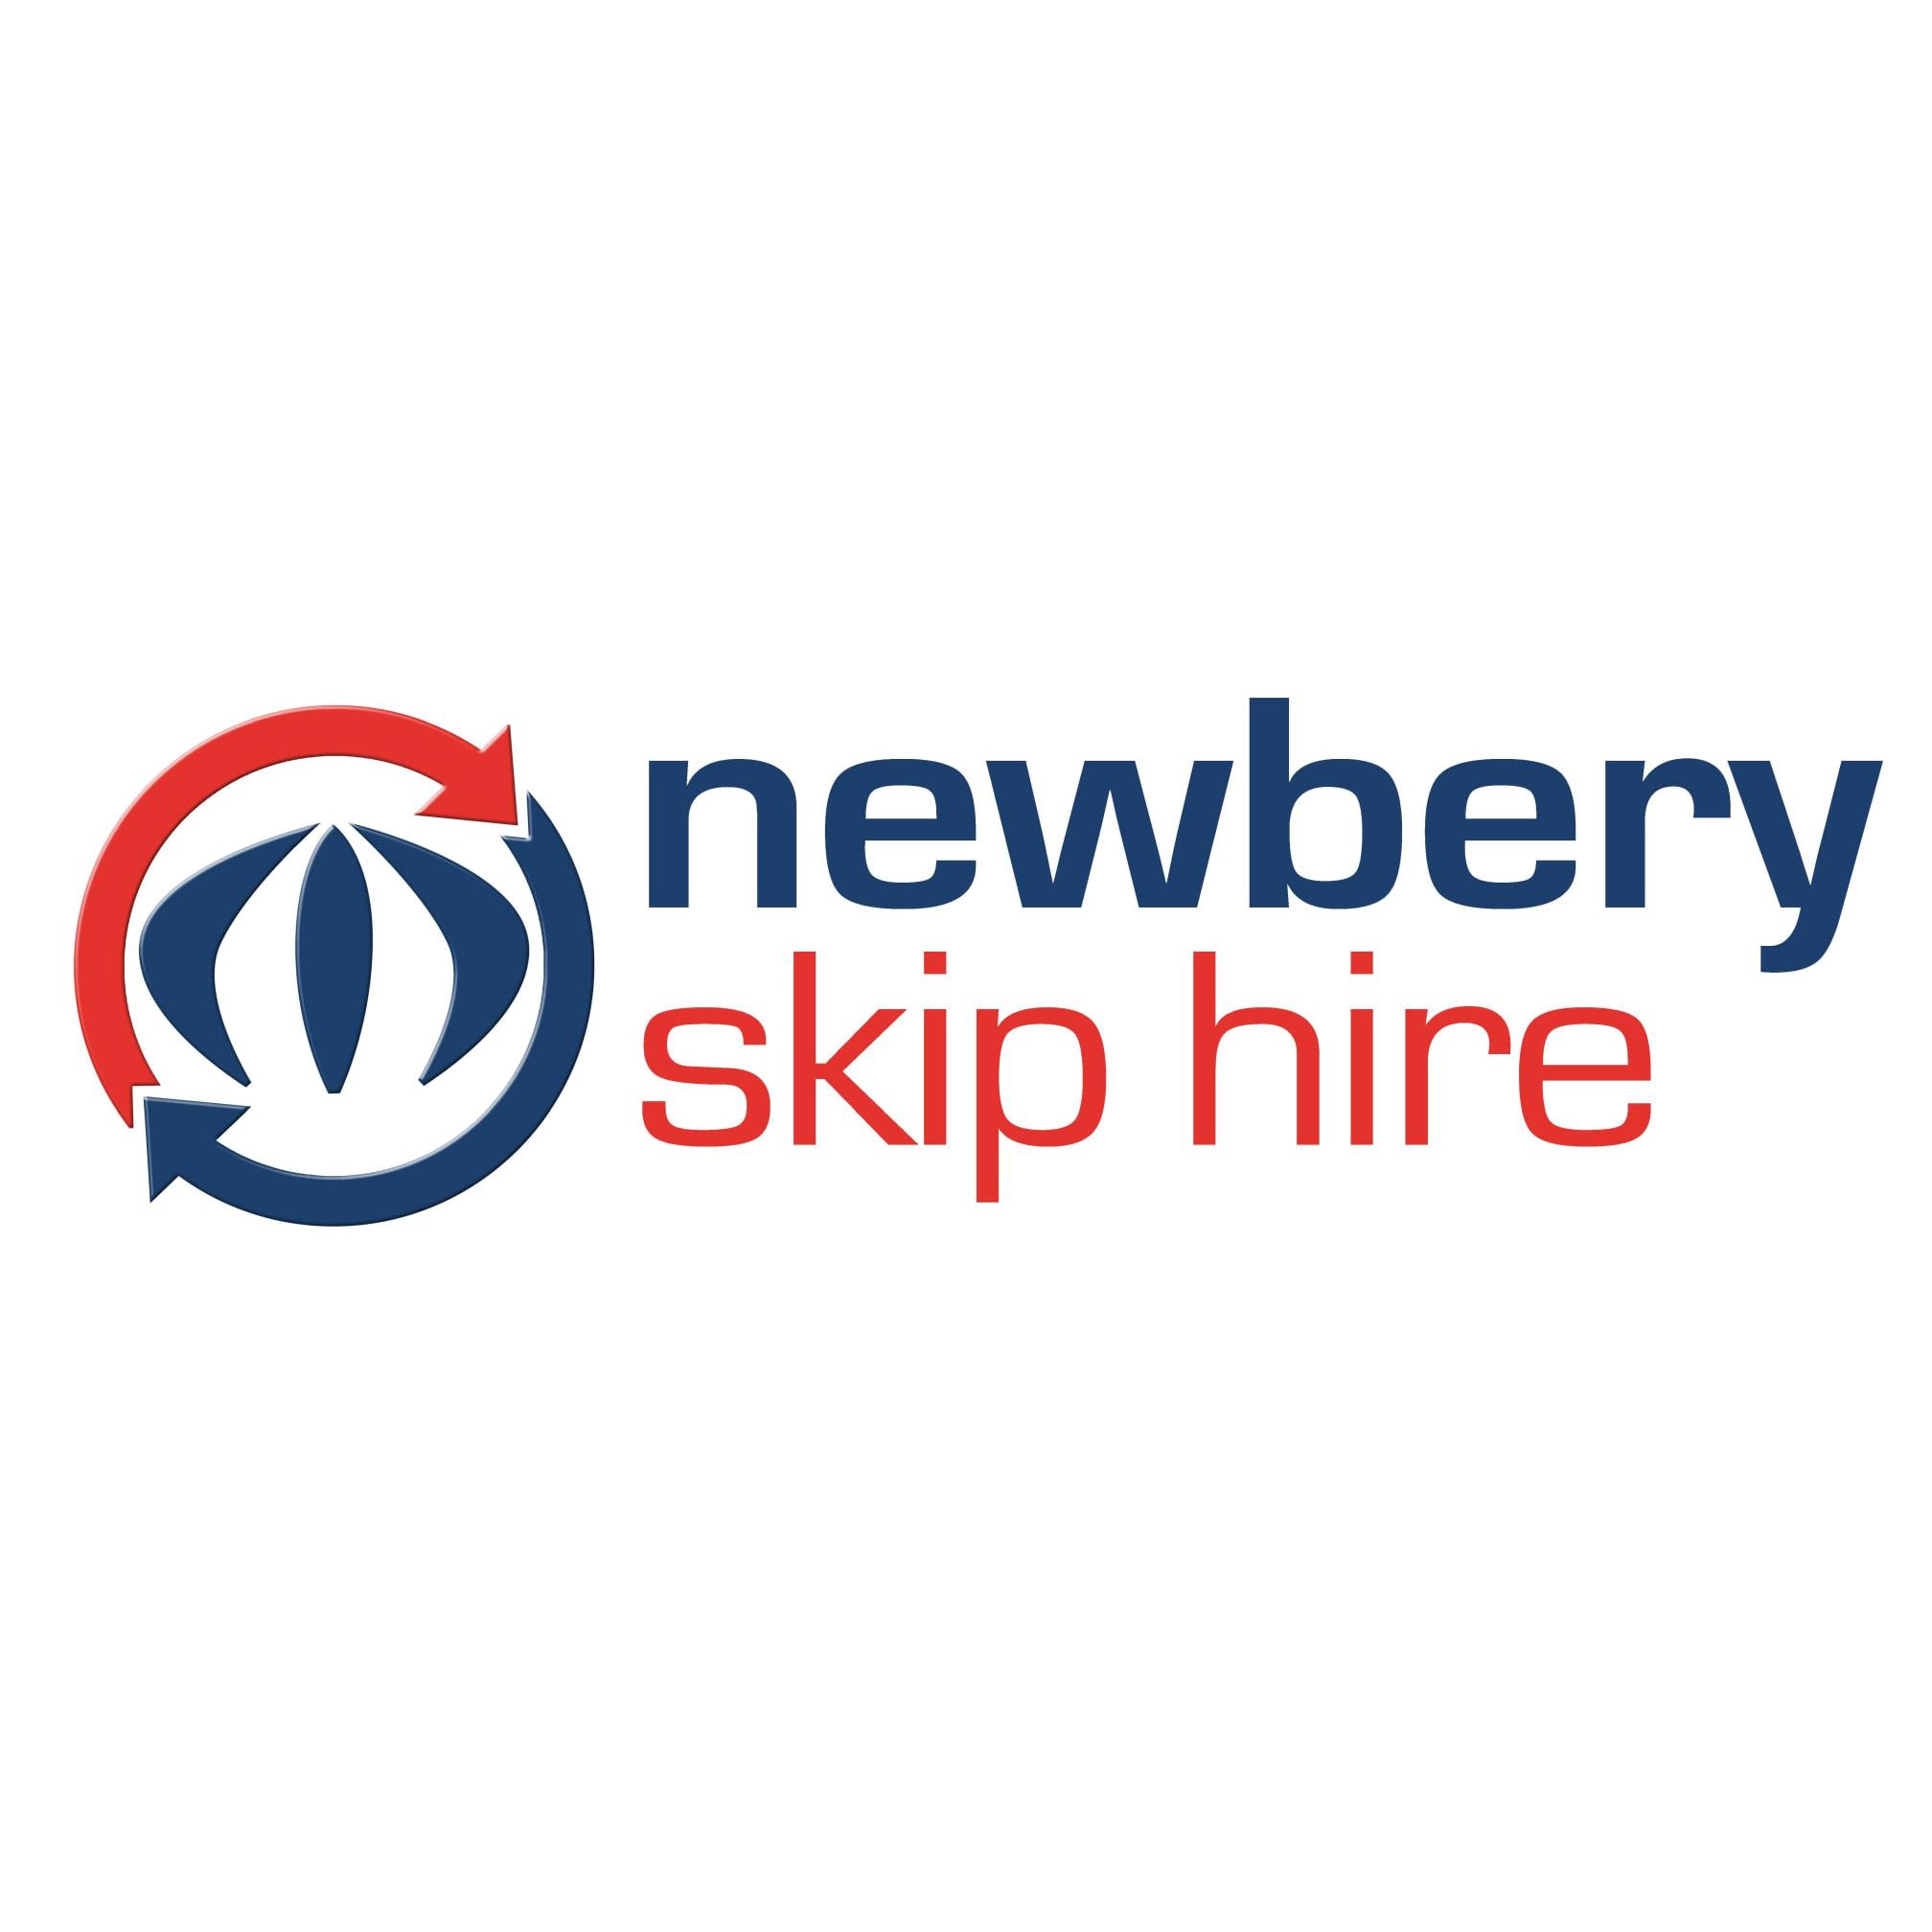 Newbery Skip Hire - Crediton, Devon EX17 1HJ - 01363 720102 | ShowMeLocal.com